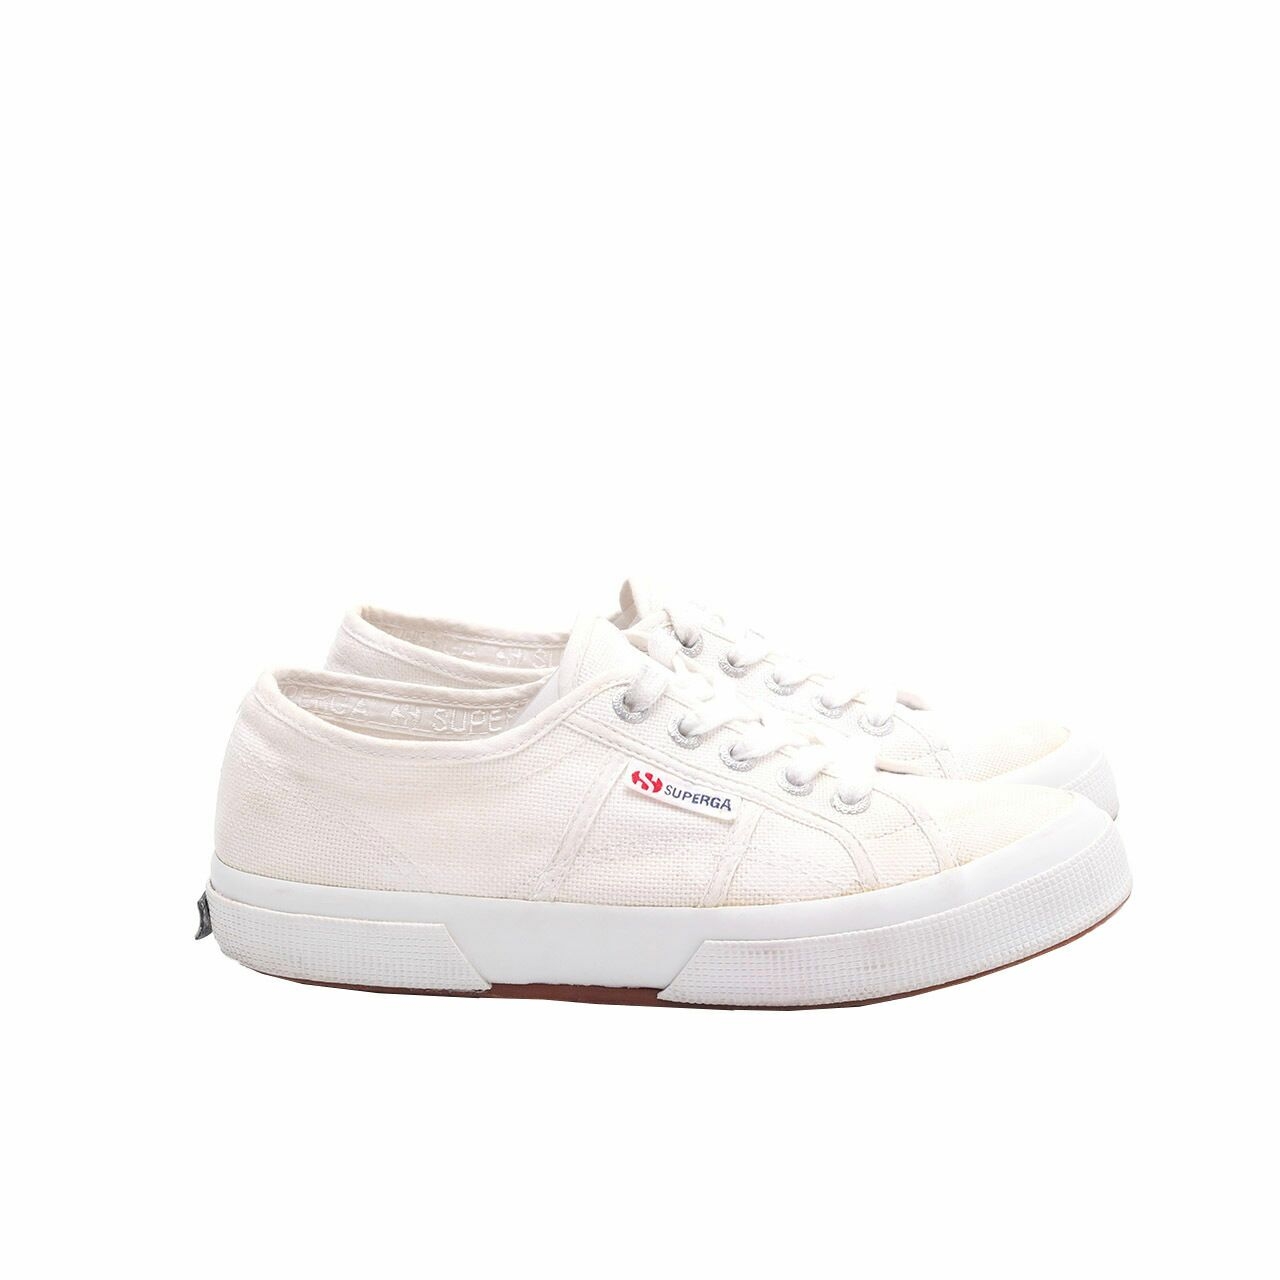 Superga White 2750 - Cotu Classic Sneakers